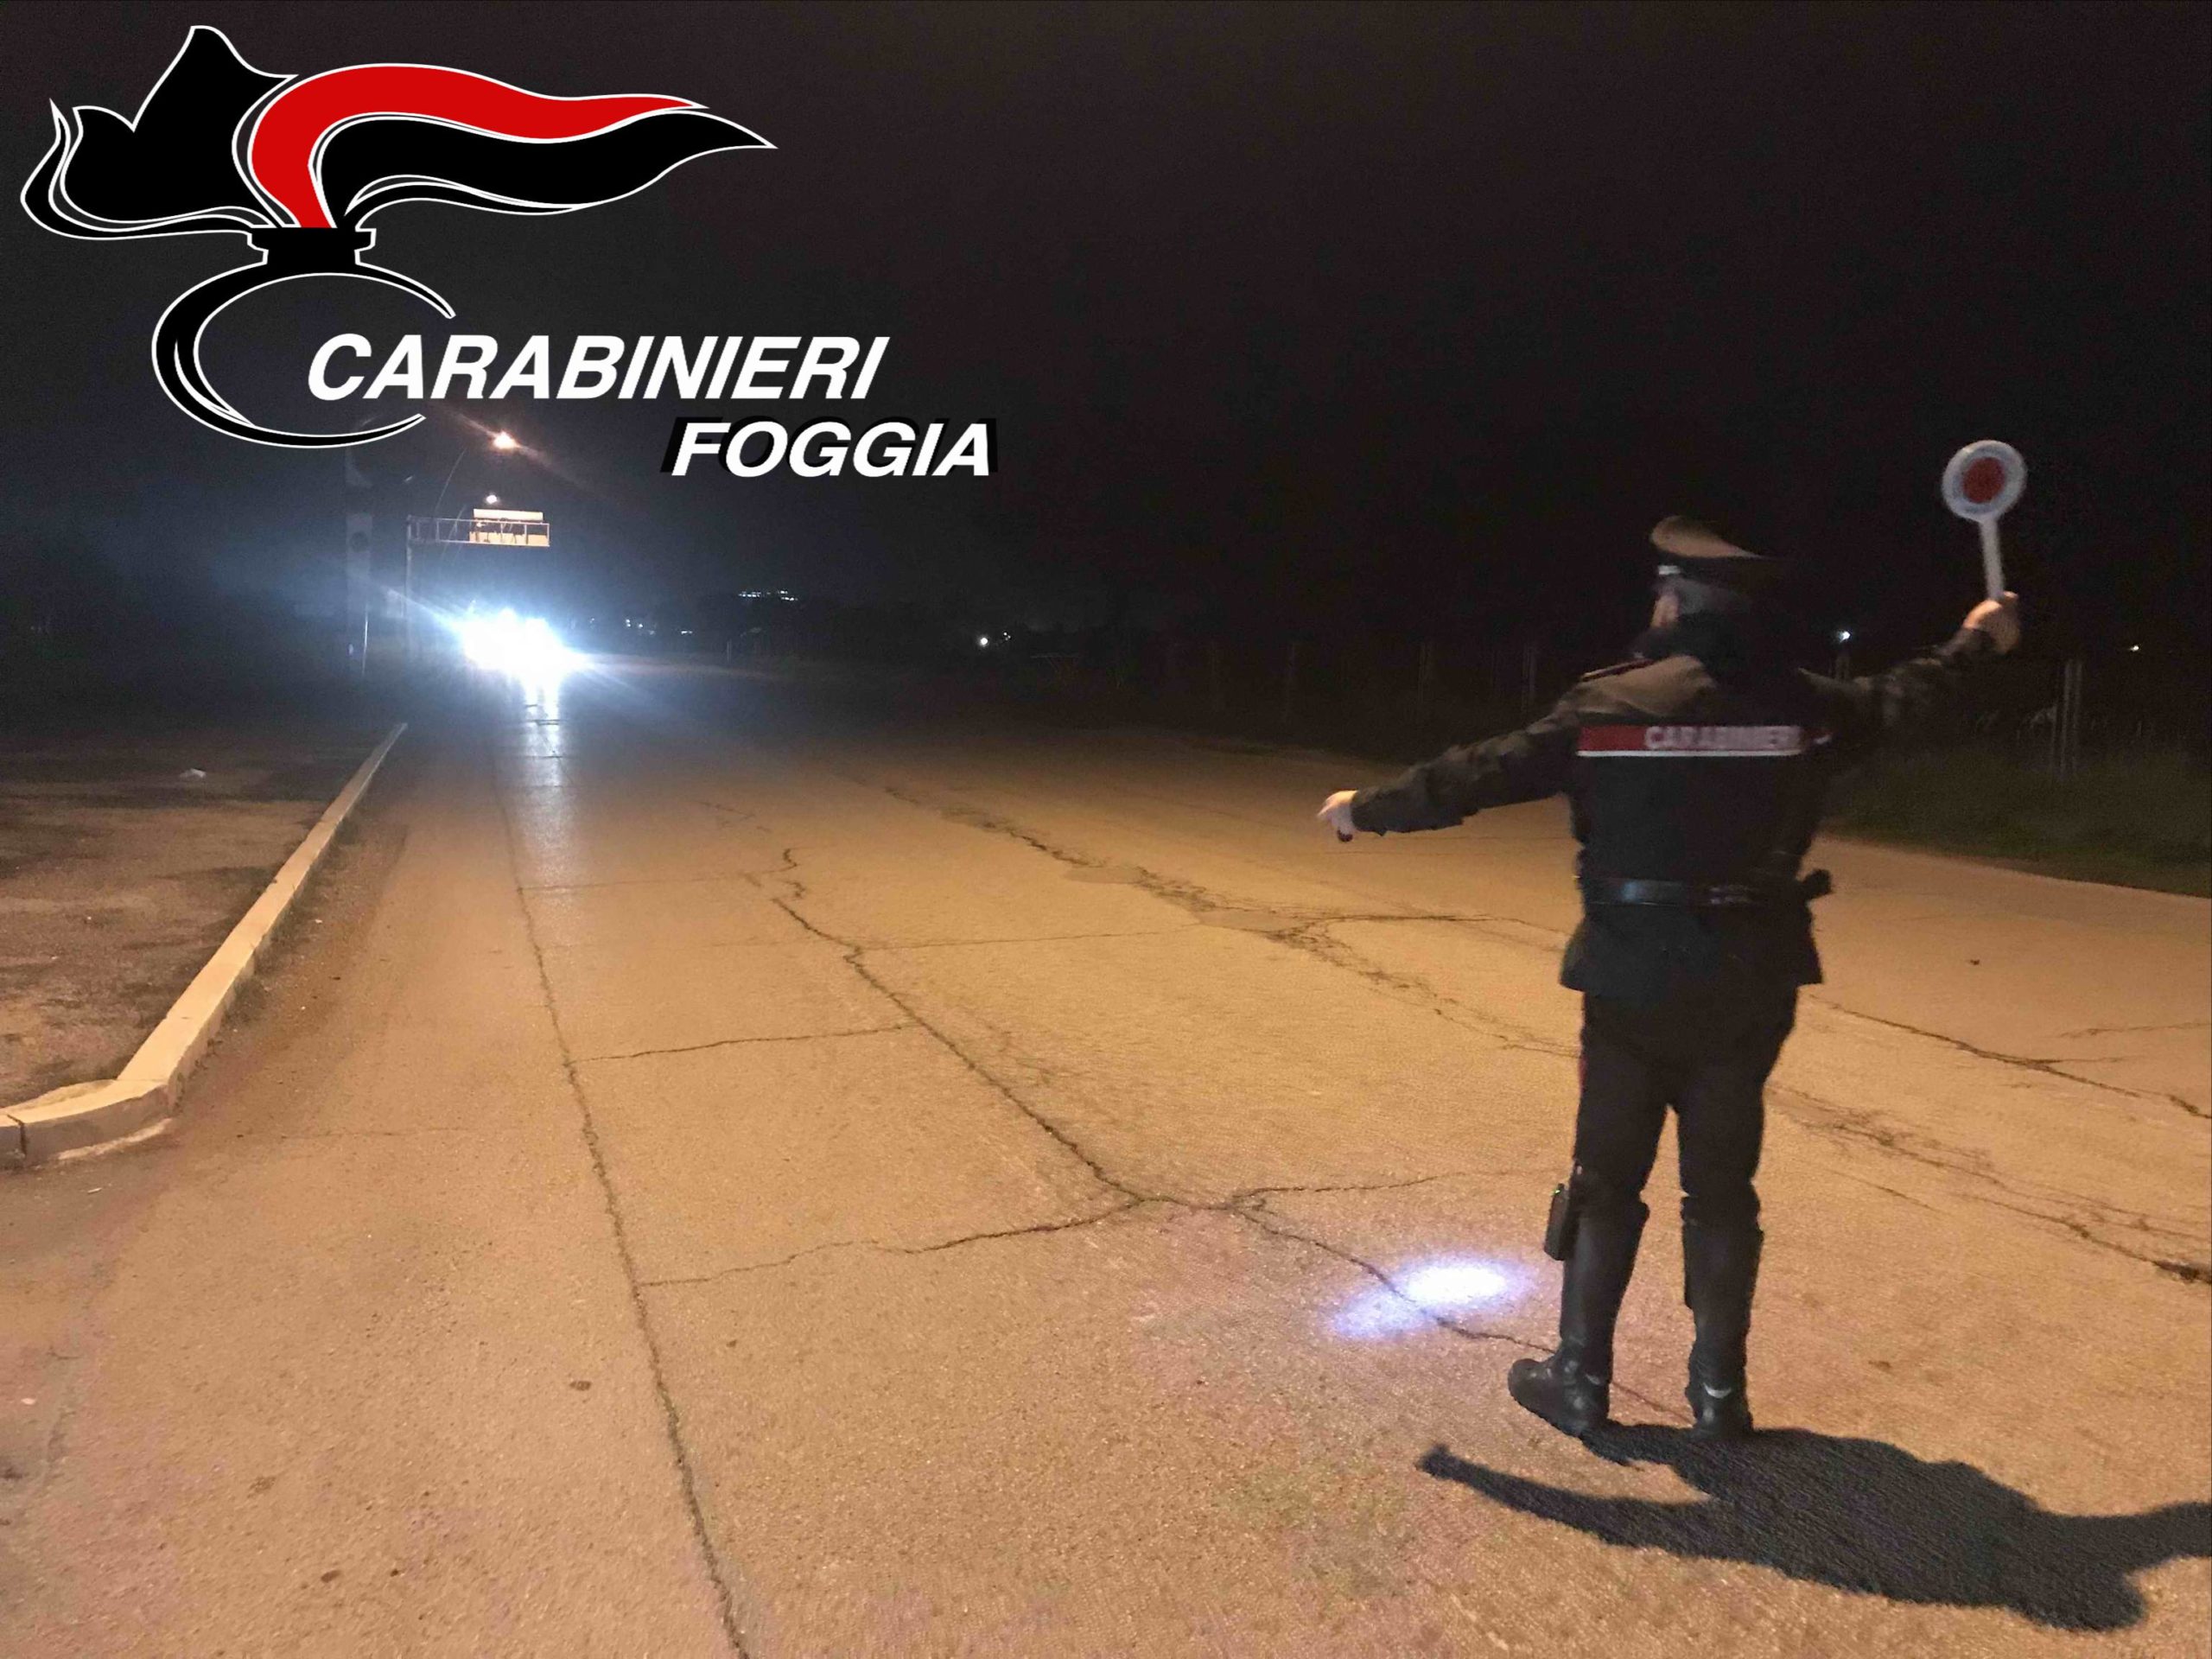 Carabinieri foggia